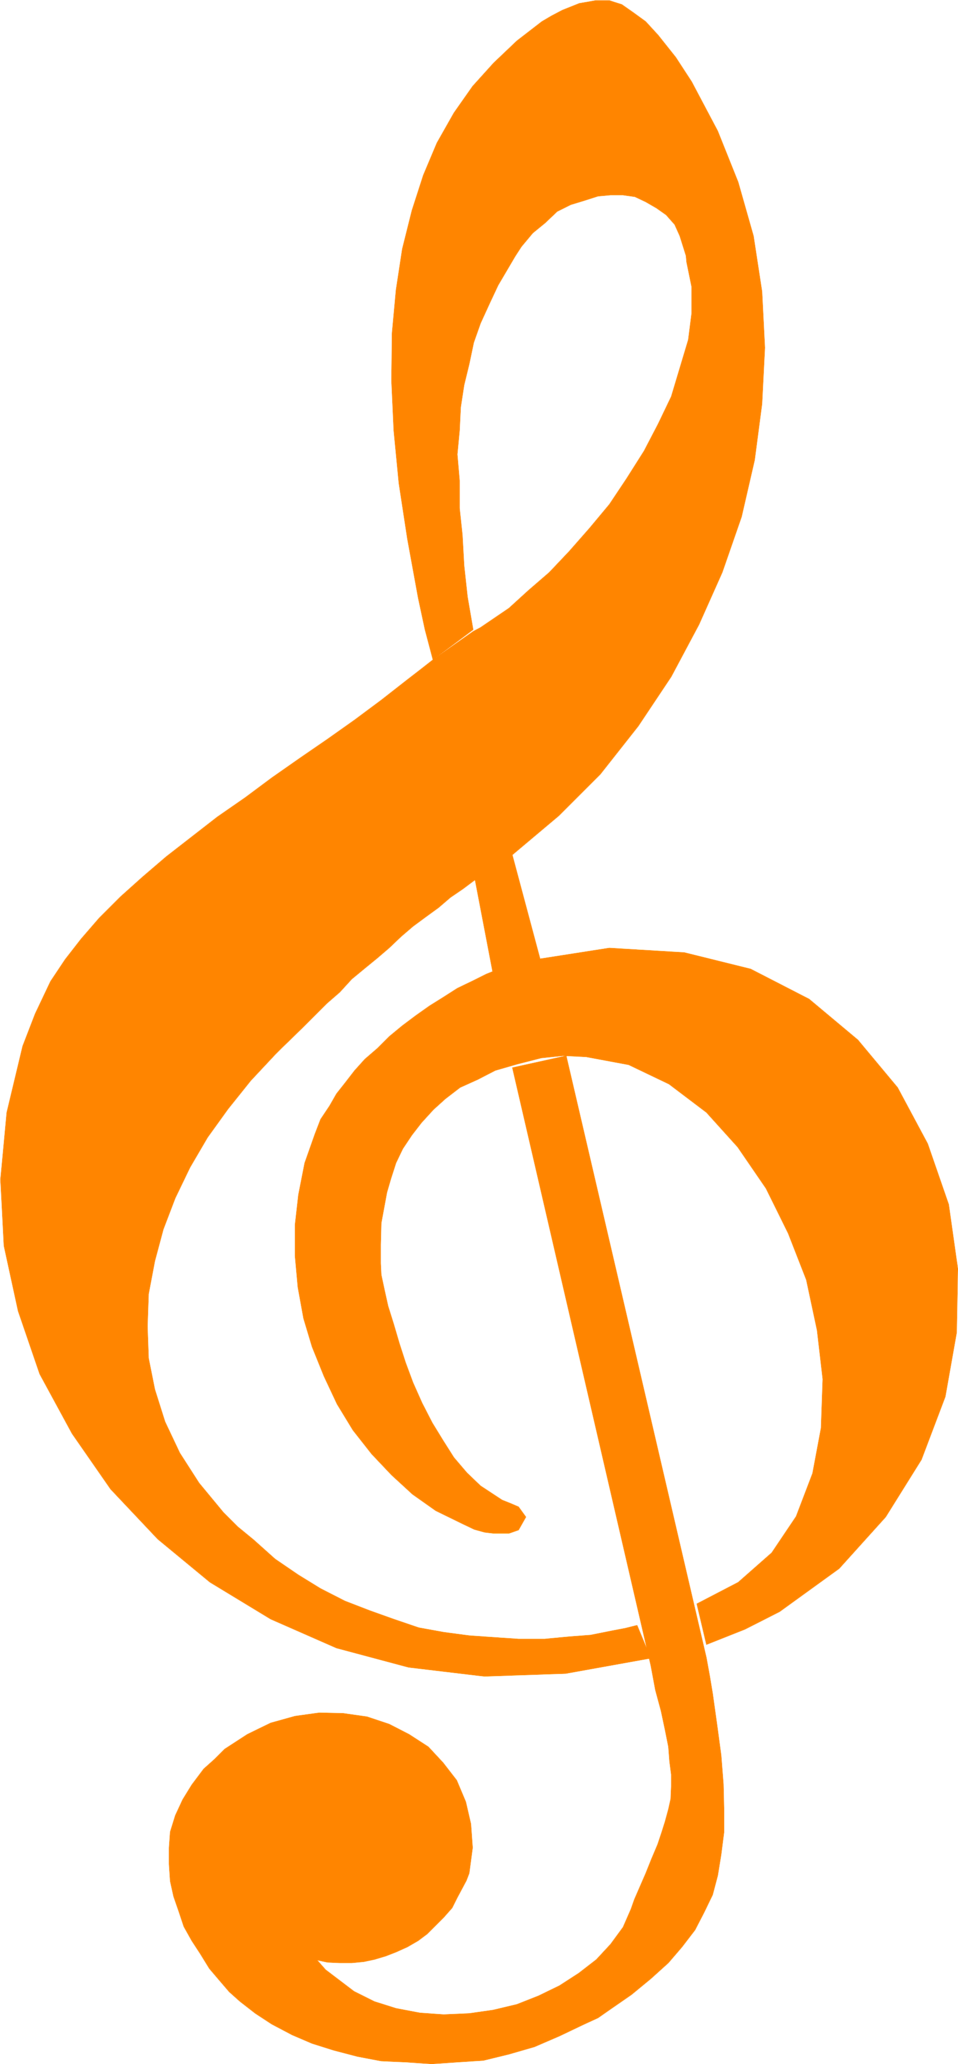 clip art free music symbols - photo #24